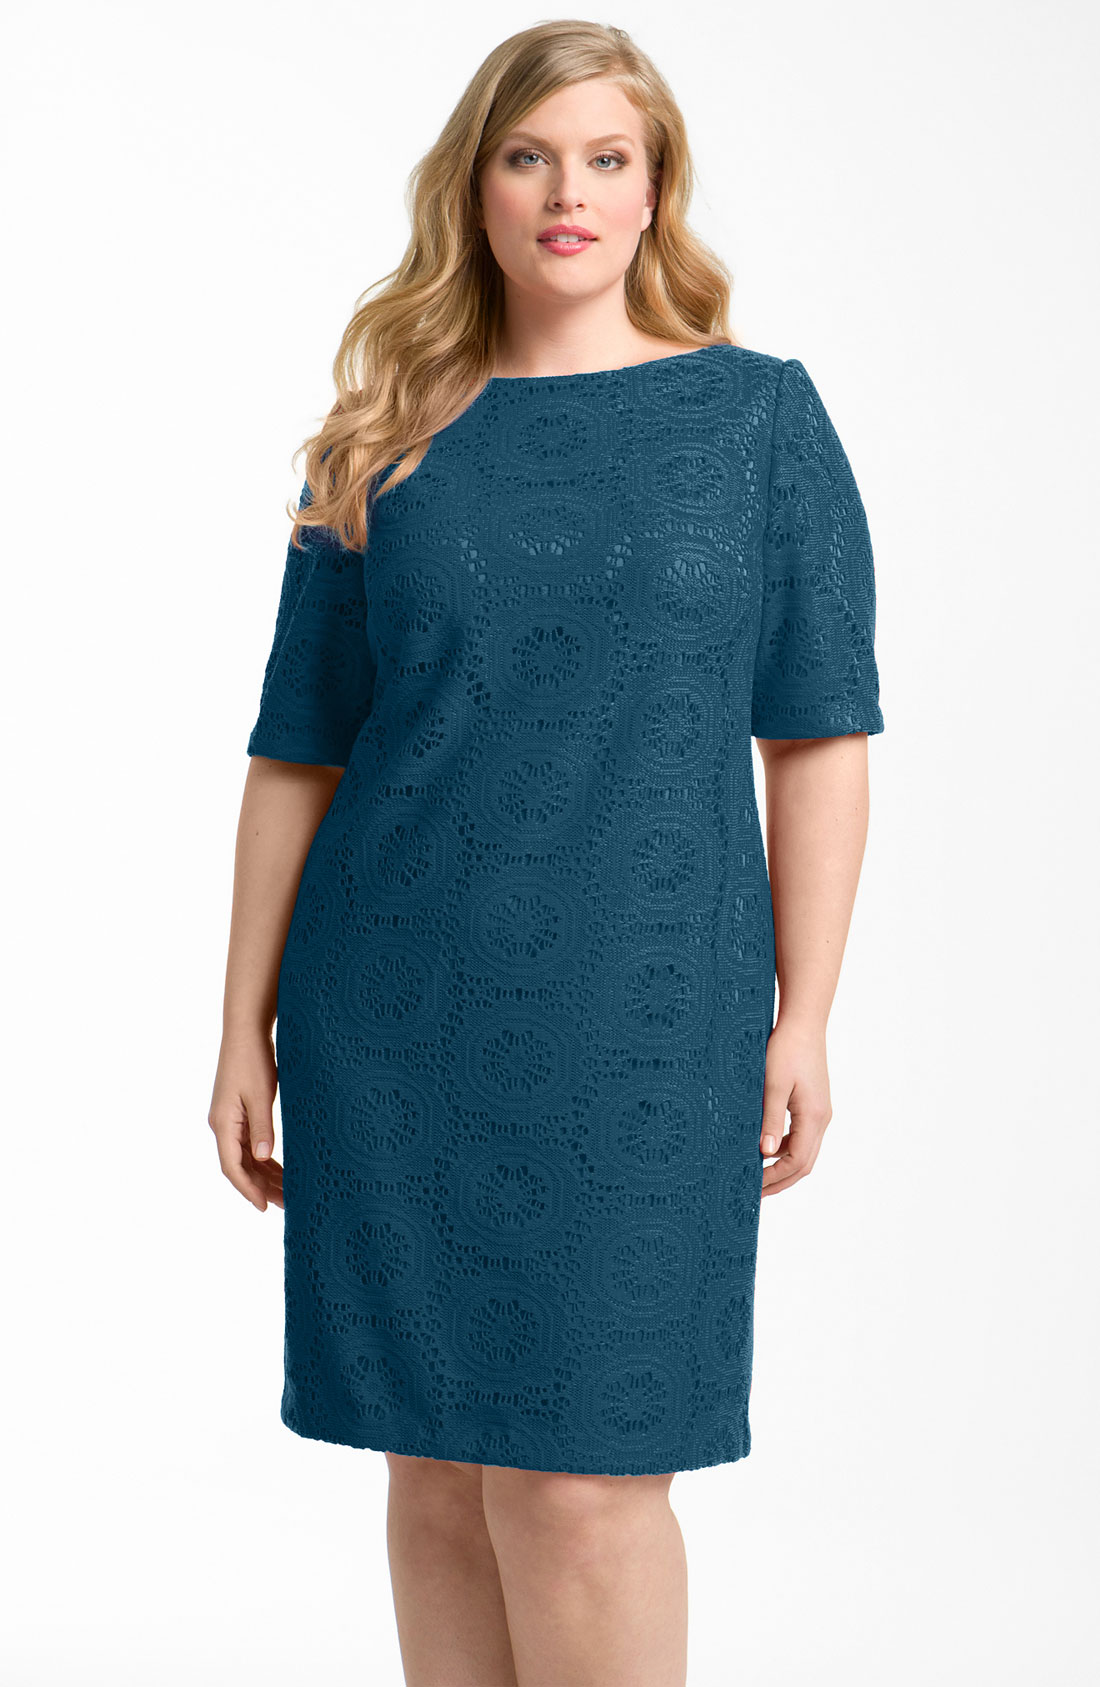 Adrianna Papell Crochet Shift Dress in Blue (dark teal) | Lyst